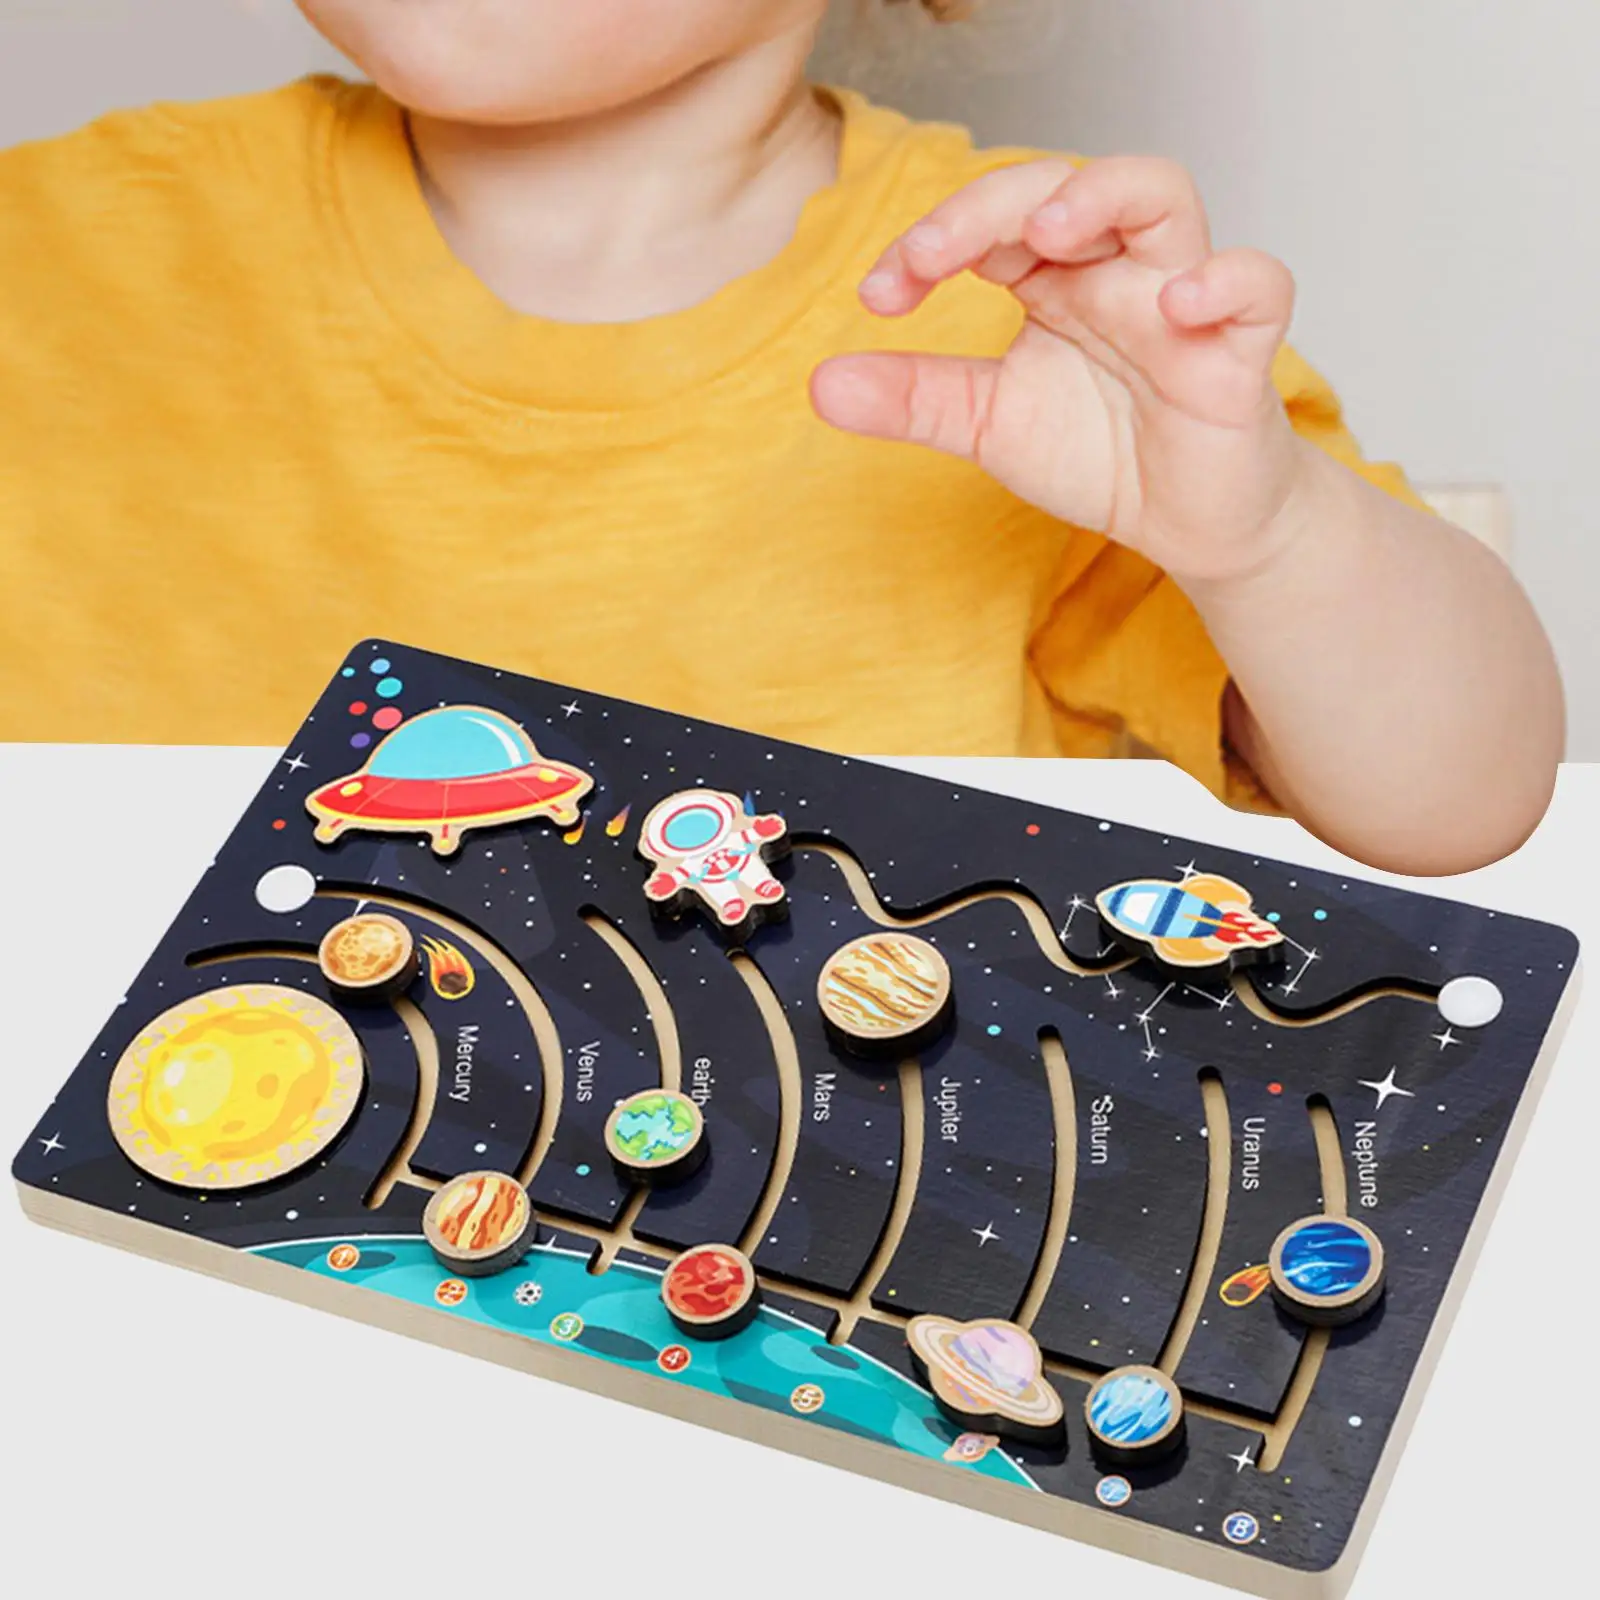 Wood Planets Game Preschool Learning Activities Science Toy Jigsaw for Preschool Kids Children